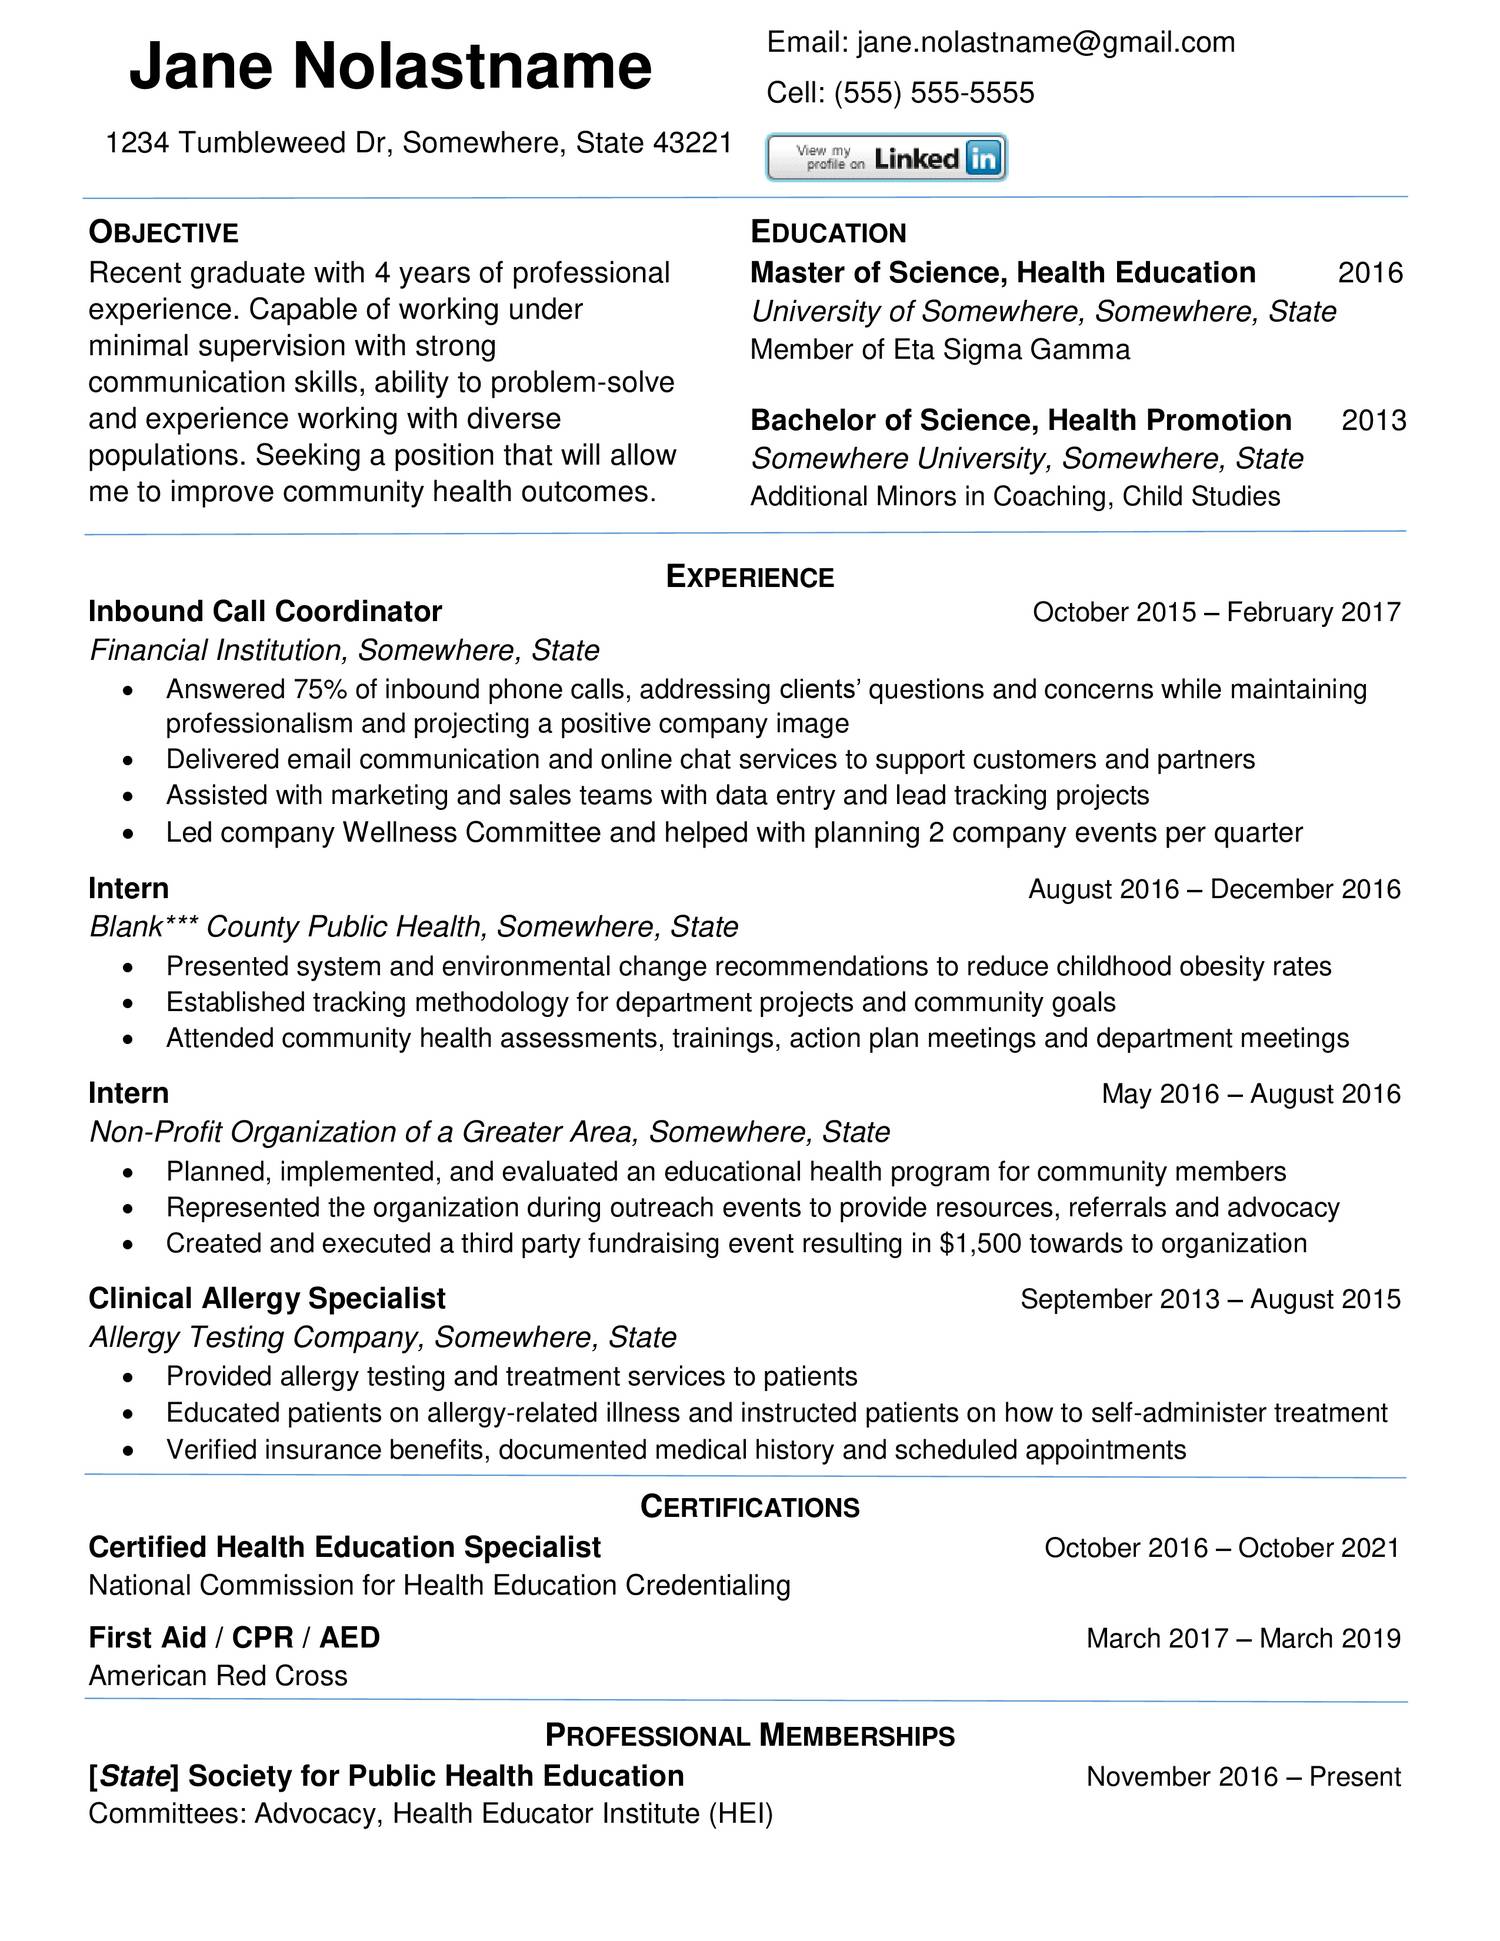 Sample resume.docx | DocDroid